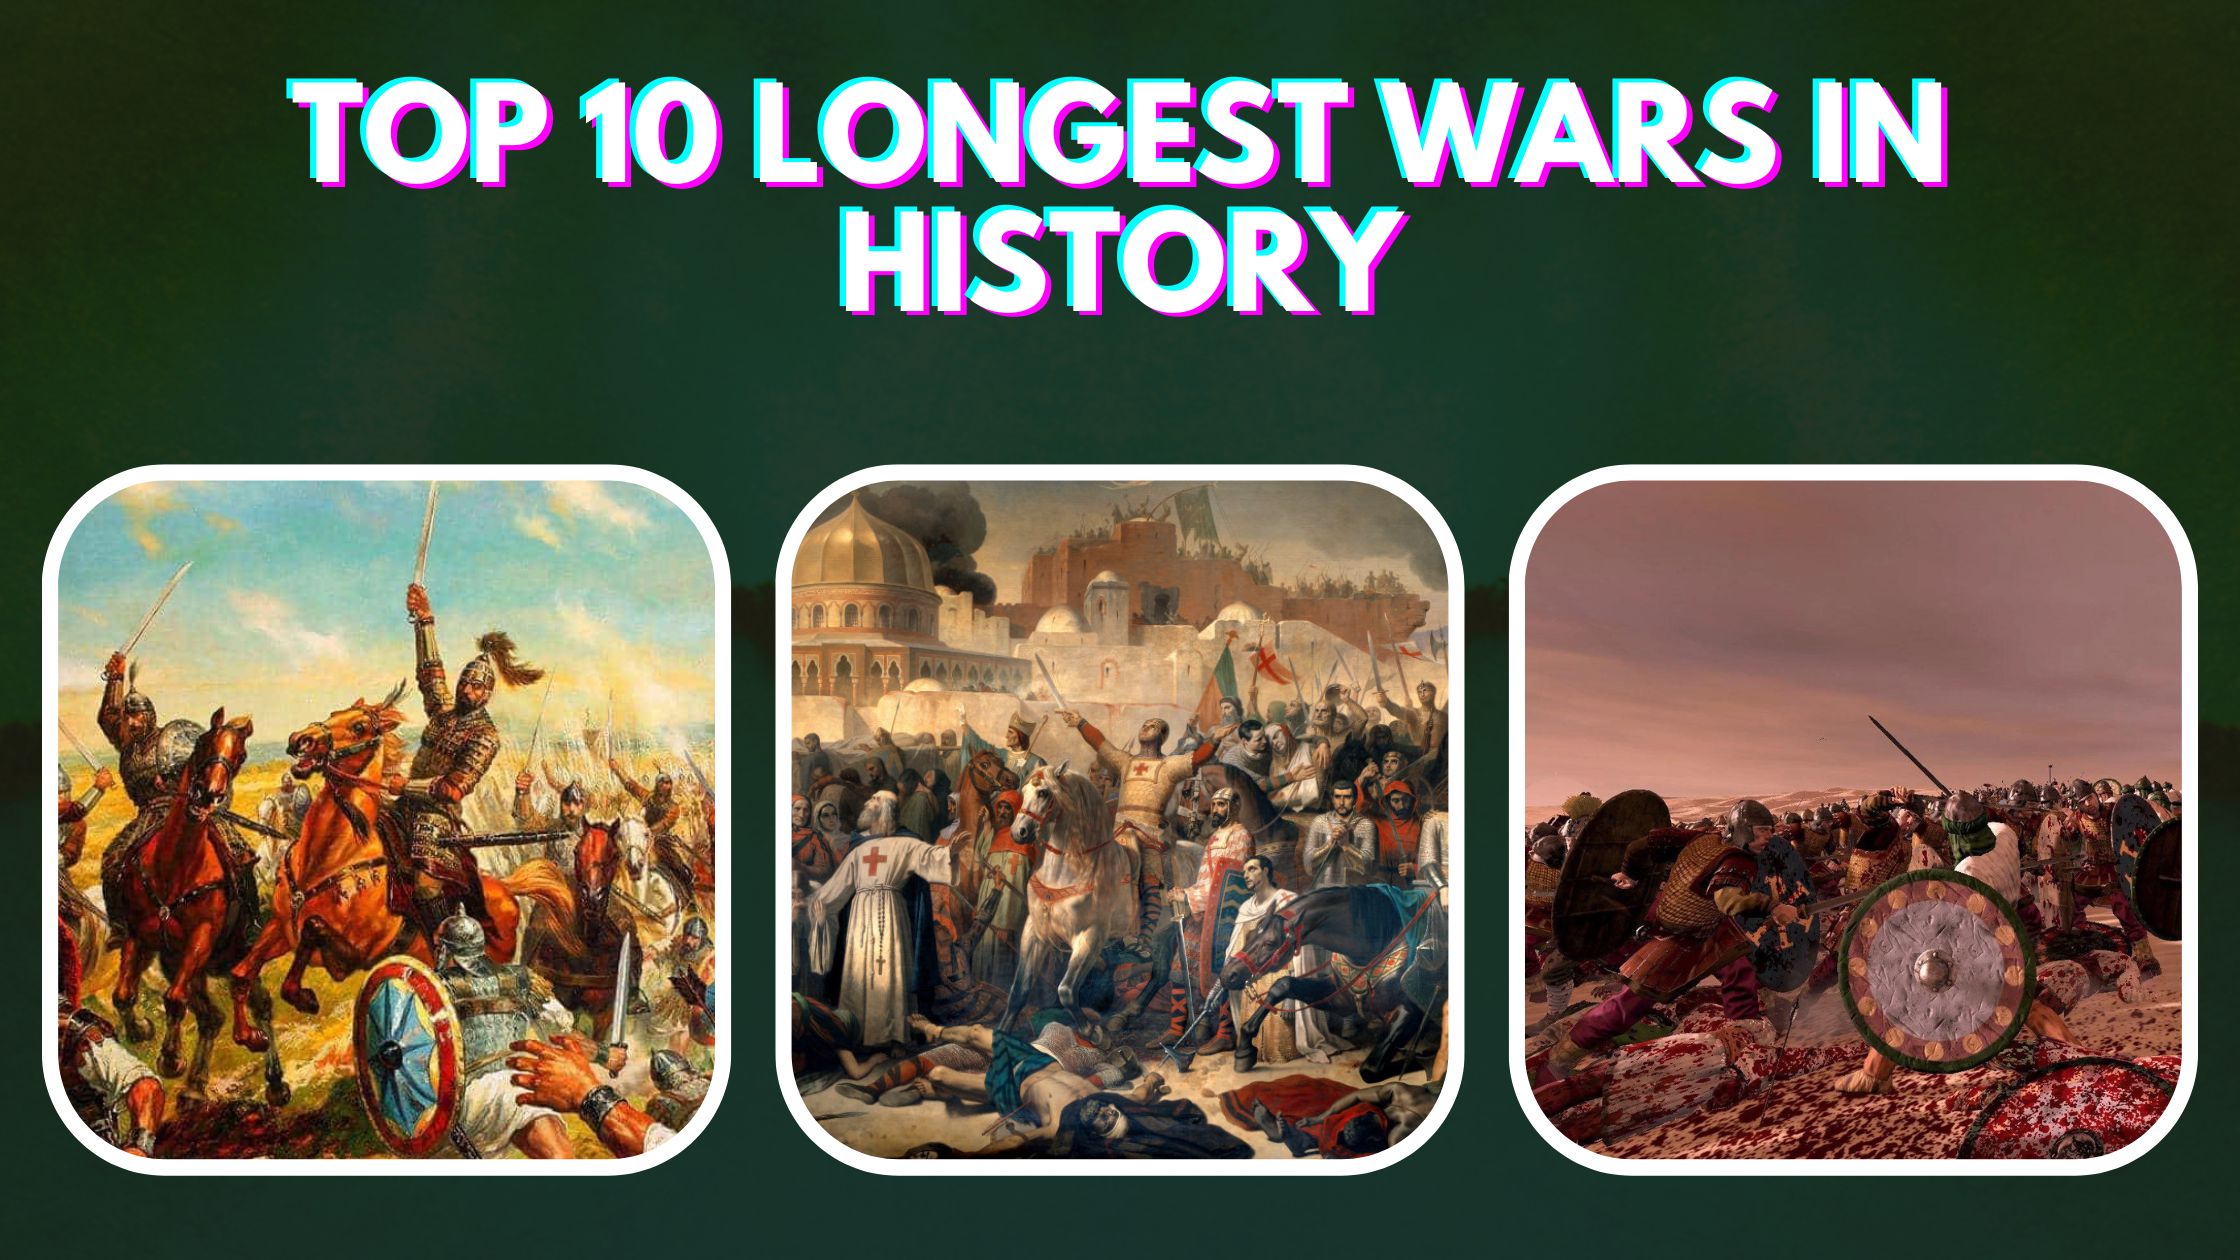 Top 10 Longest Wars in History